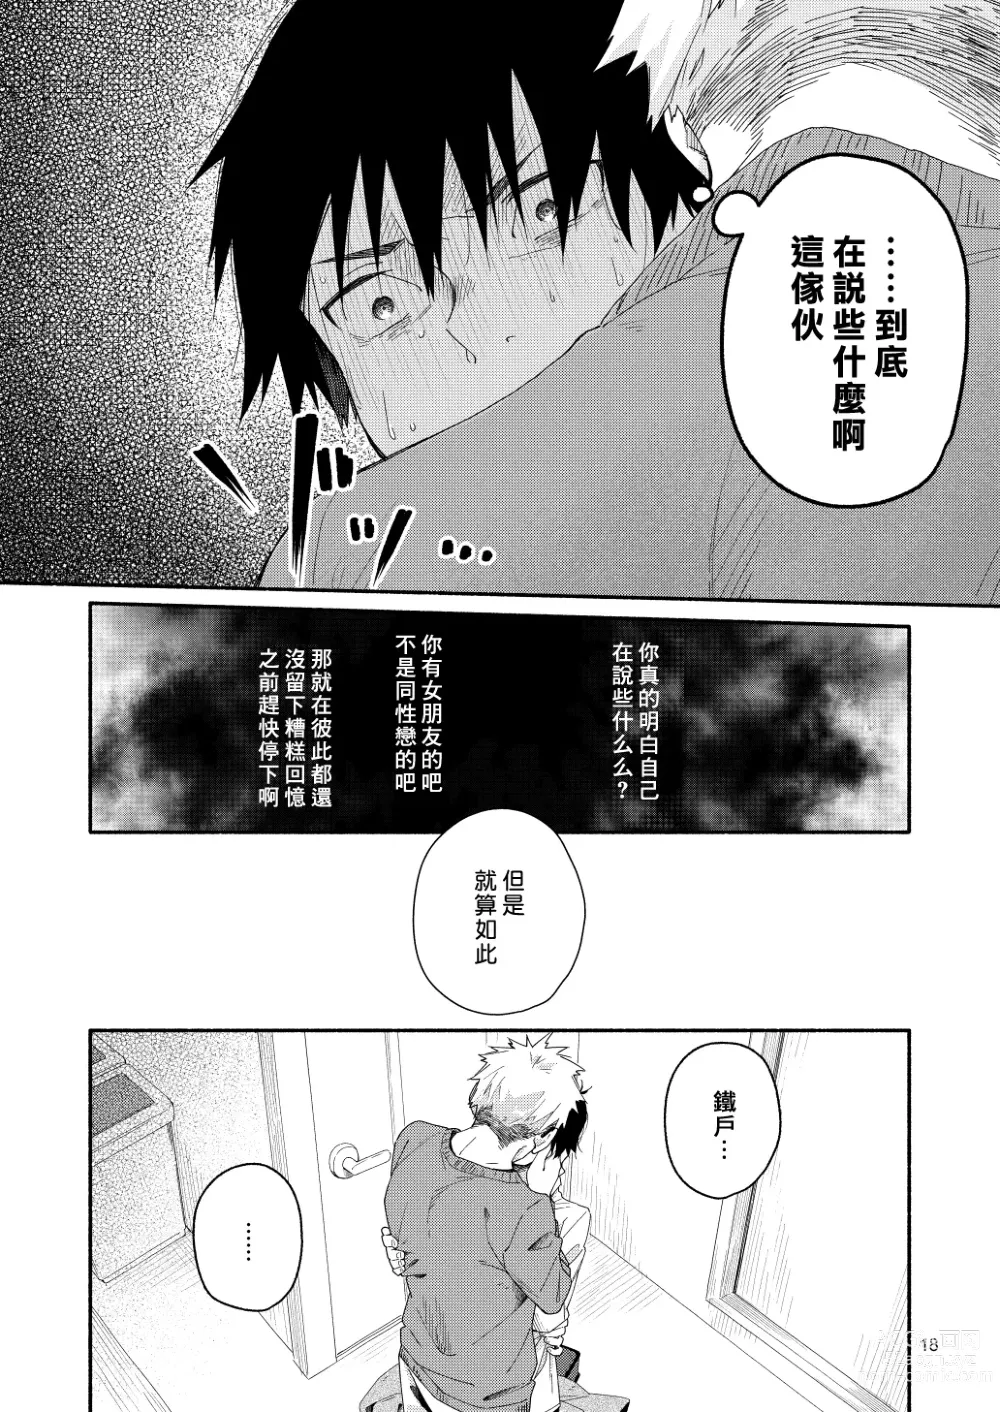 Page 16 of doujinshi sugar-ism